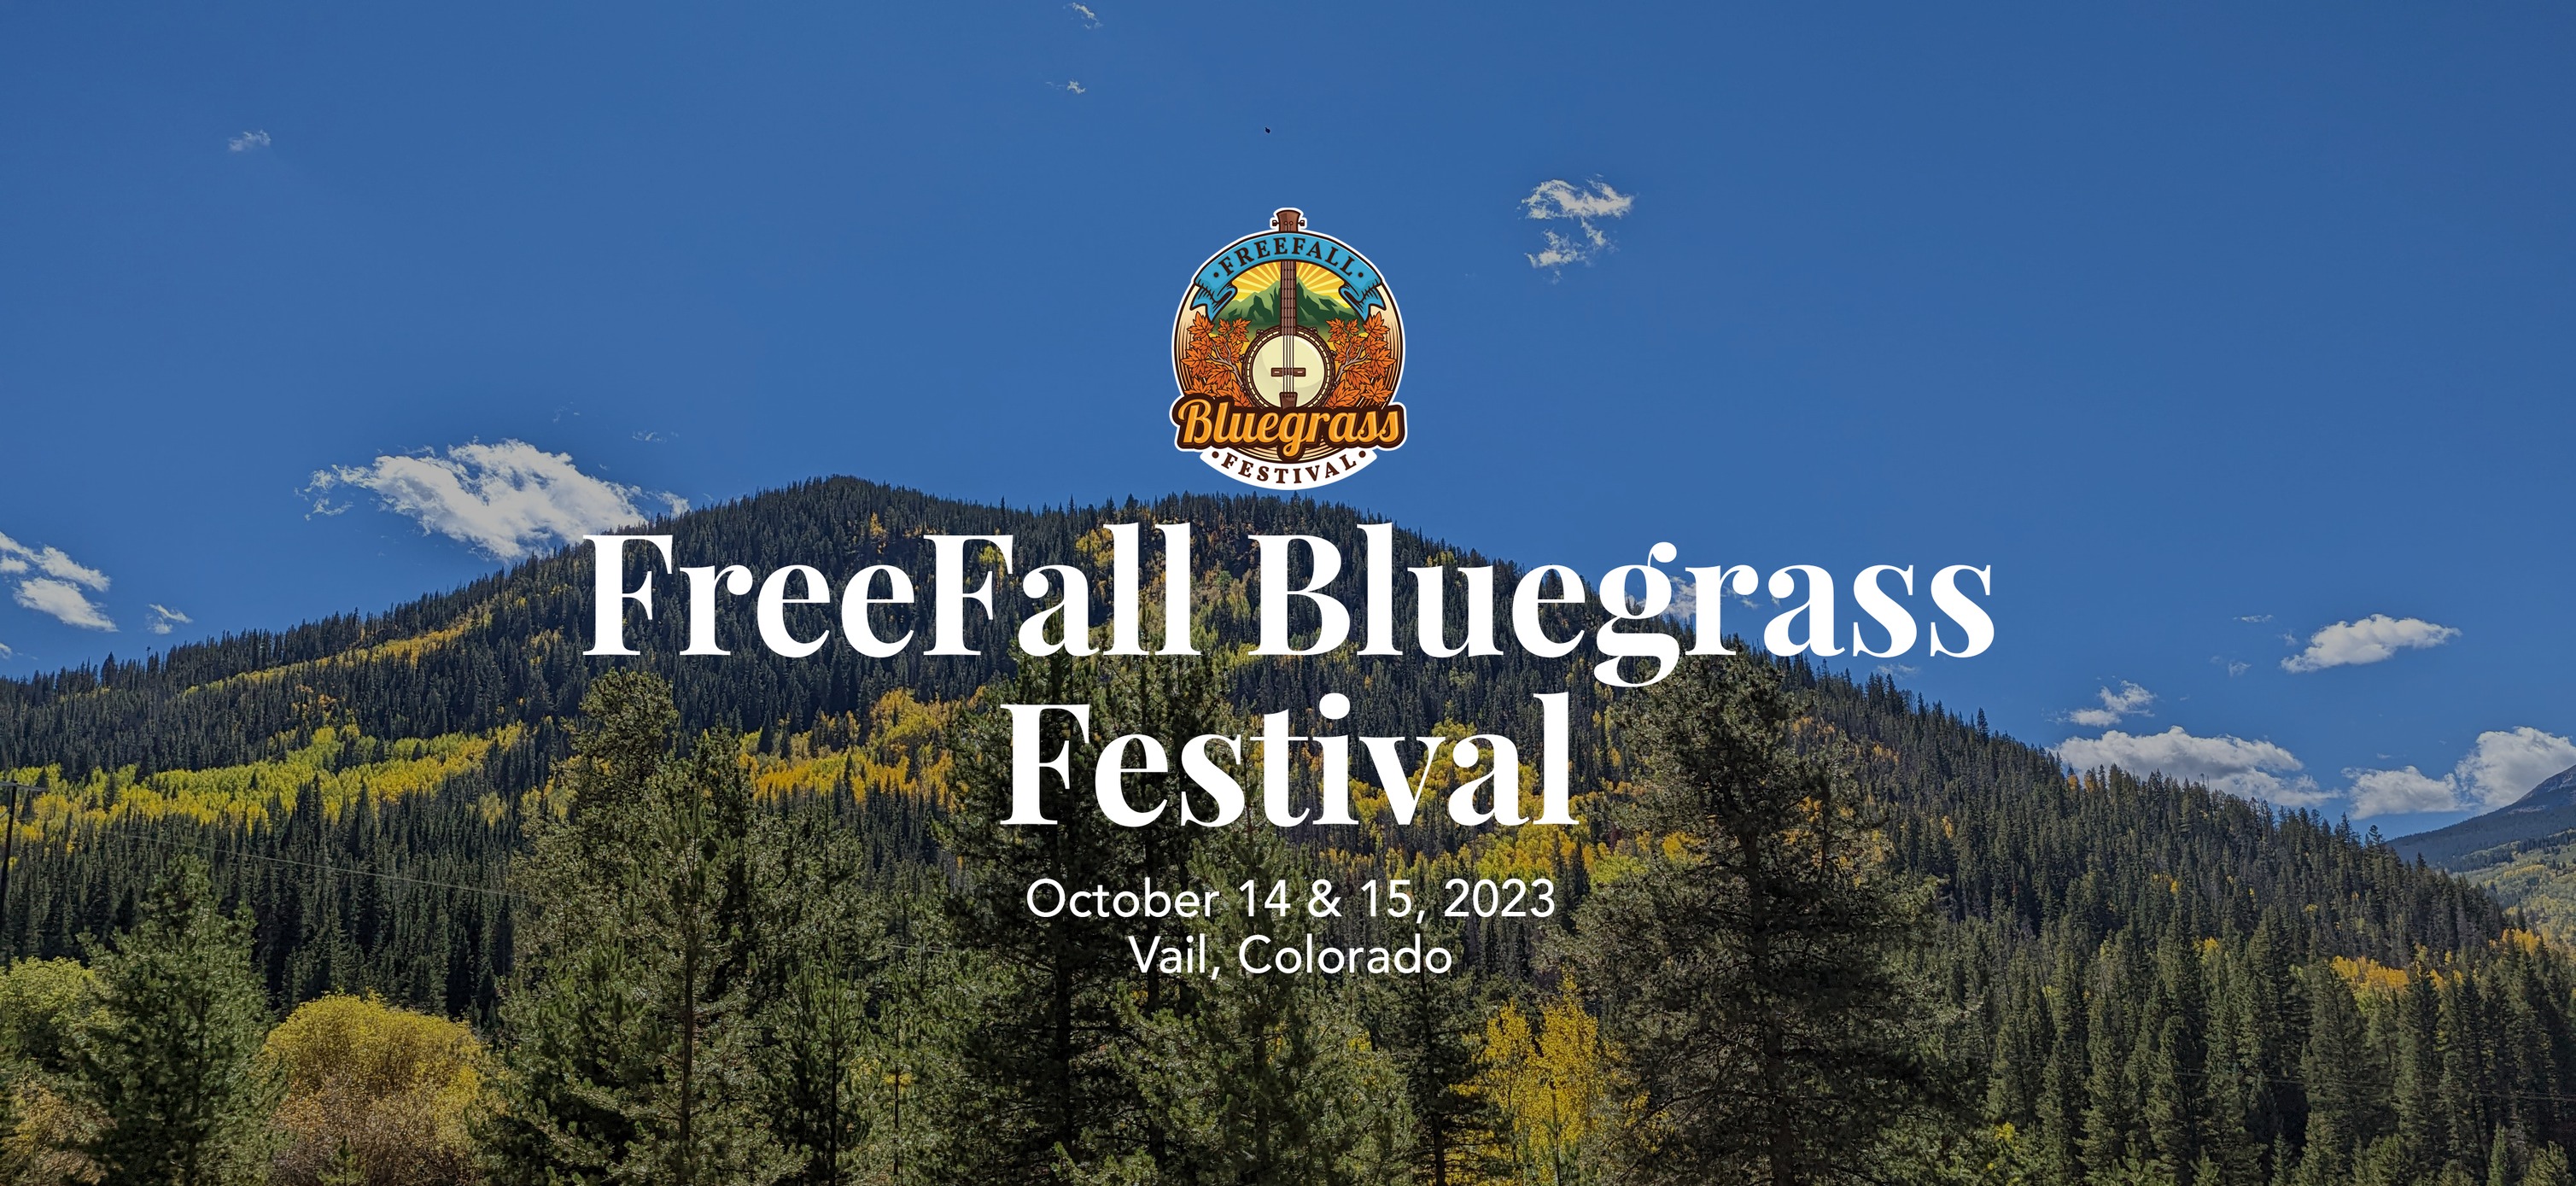 Freefall Bluegrass Festival poster. Colorado Mountain town fall festivals